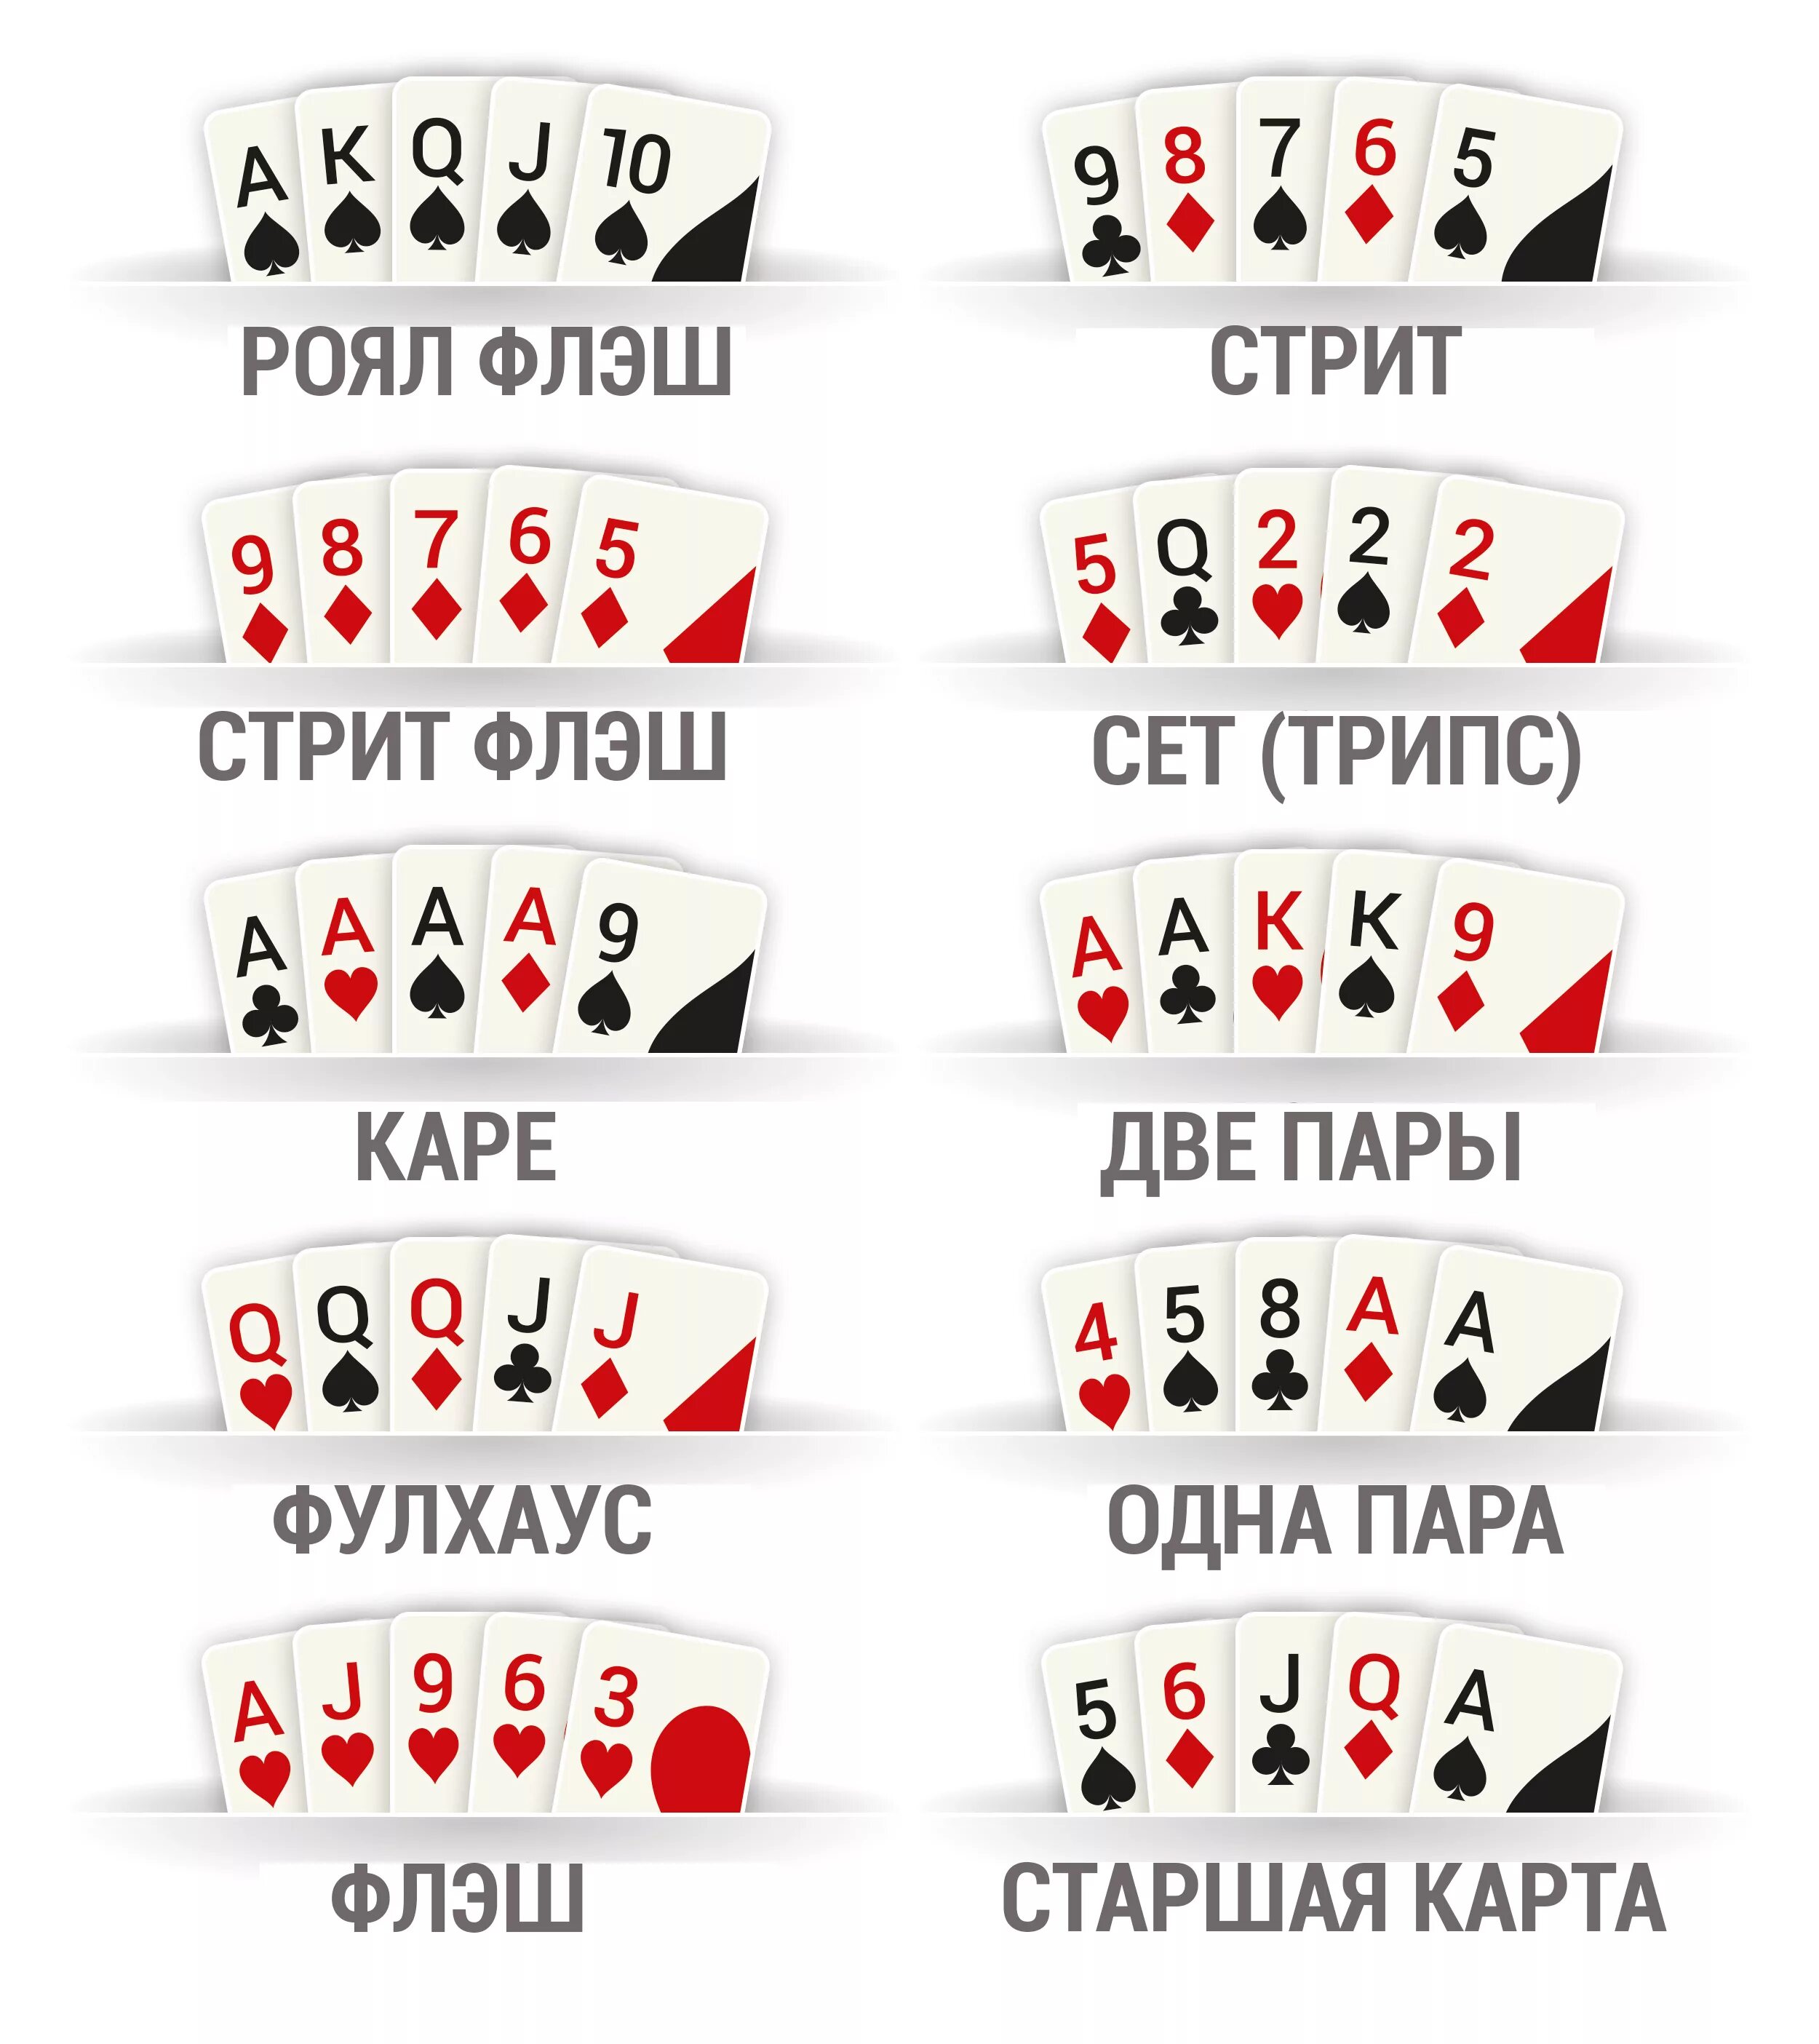 Покер комбинации карт. Порядок комбинаций в покере. Комбинации карт в покере Техасский холдем. Покер комбинации Техасский Холдинг. Раскладка покера картинки комбинации